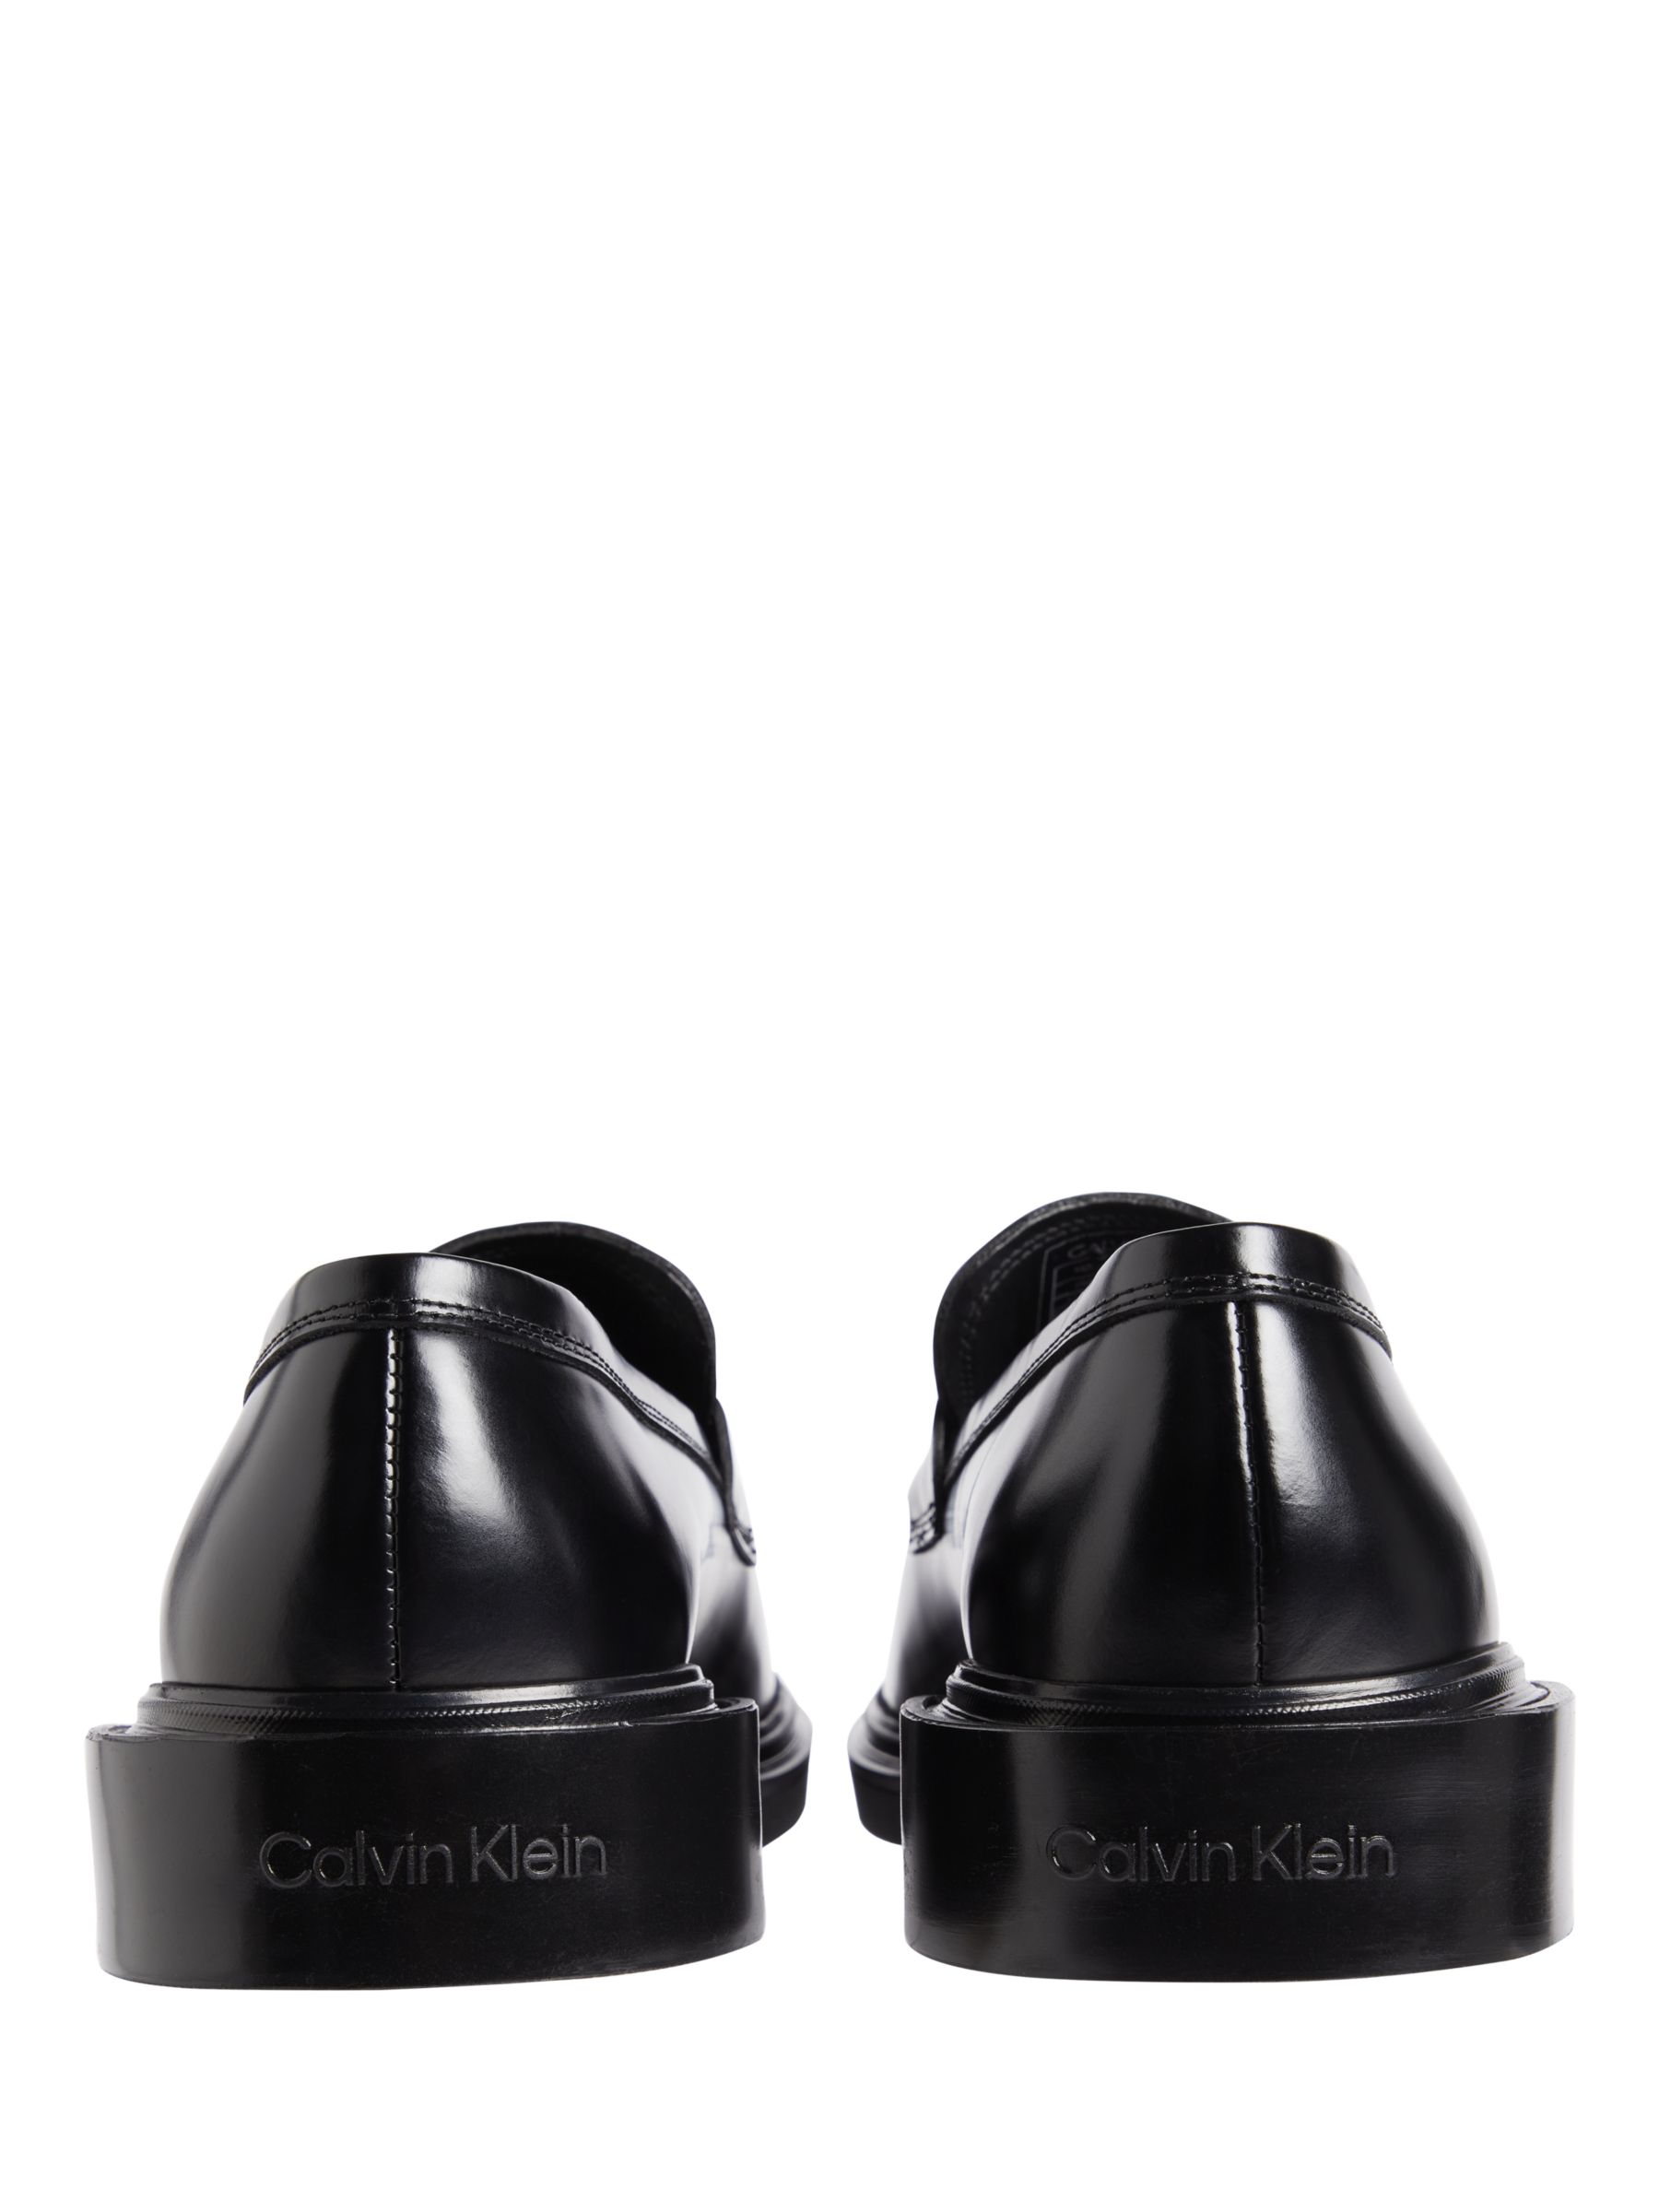 Buy Calvin Klein Leather Moccasins, Black Online at johnlewis.com